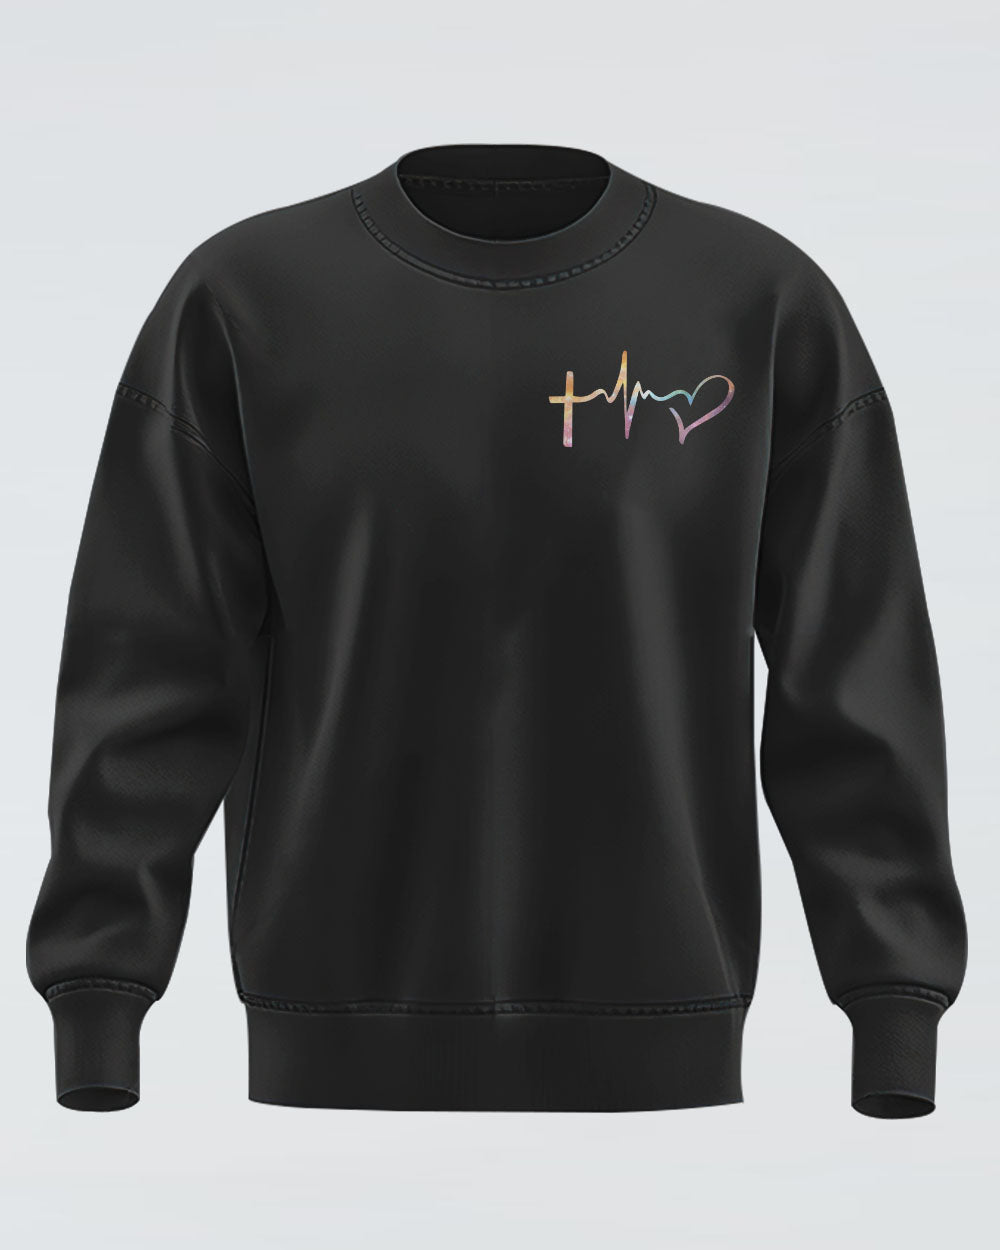 Faith Galaxy Cross Women's Christian Sweatshirt